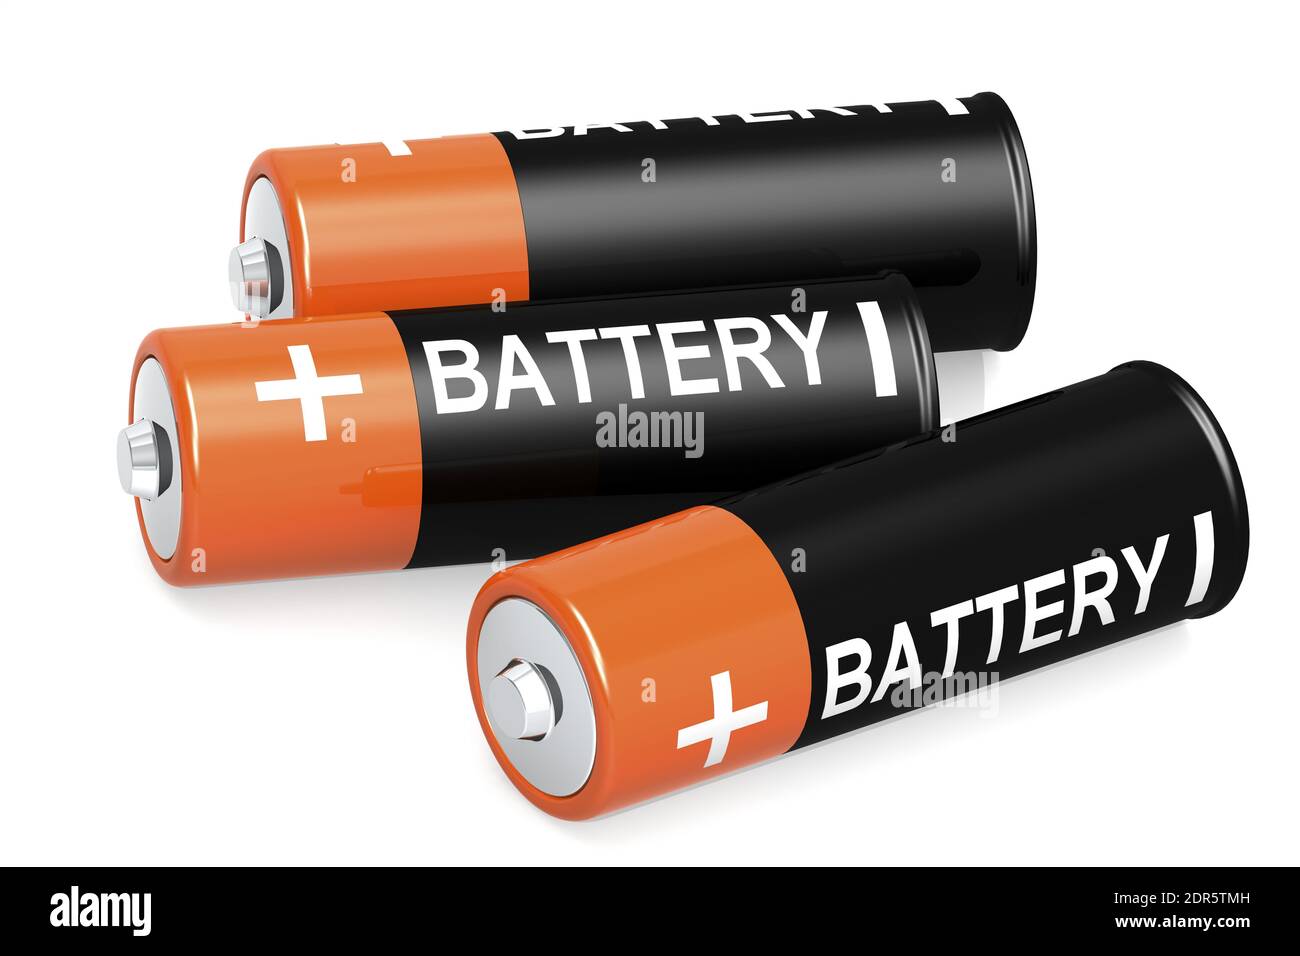 Doppel a batterie -Fotos und -Bildmaterial in hoher Auflösung – Alamy